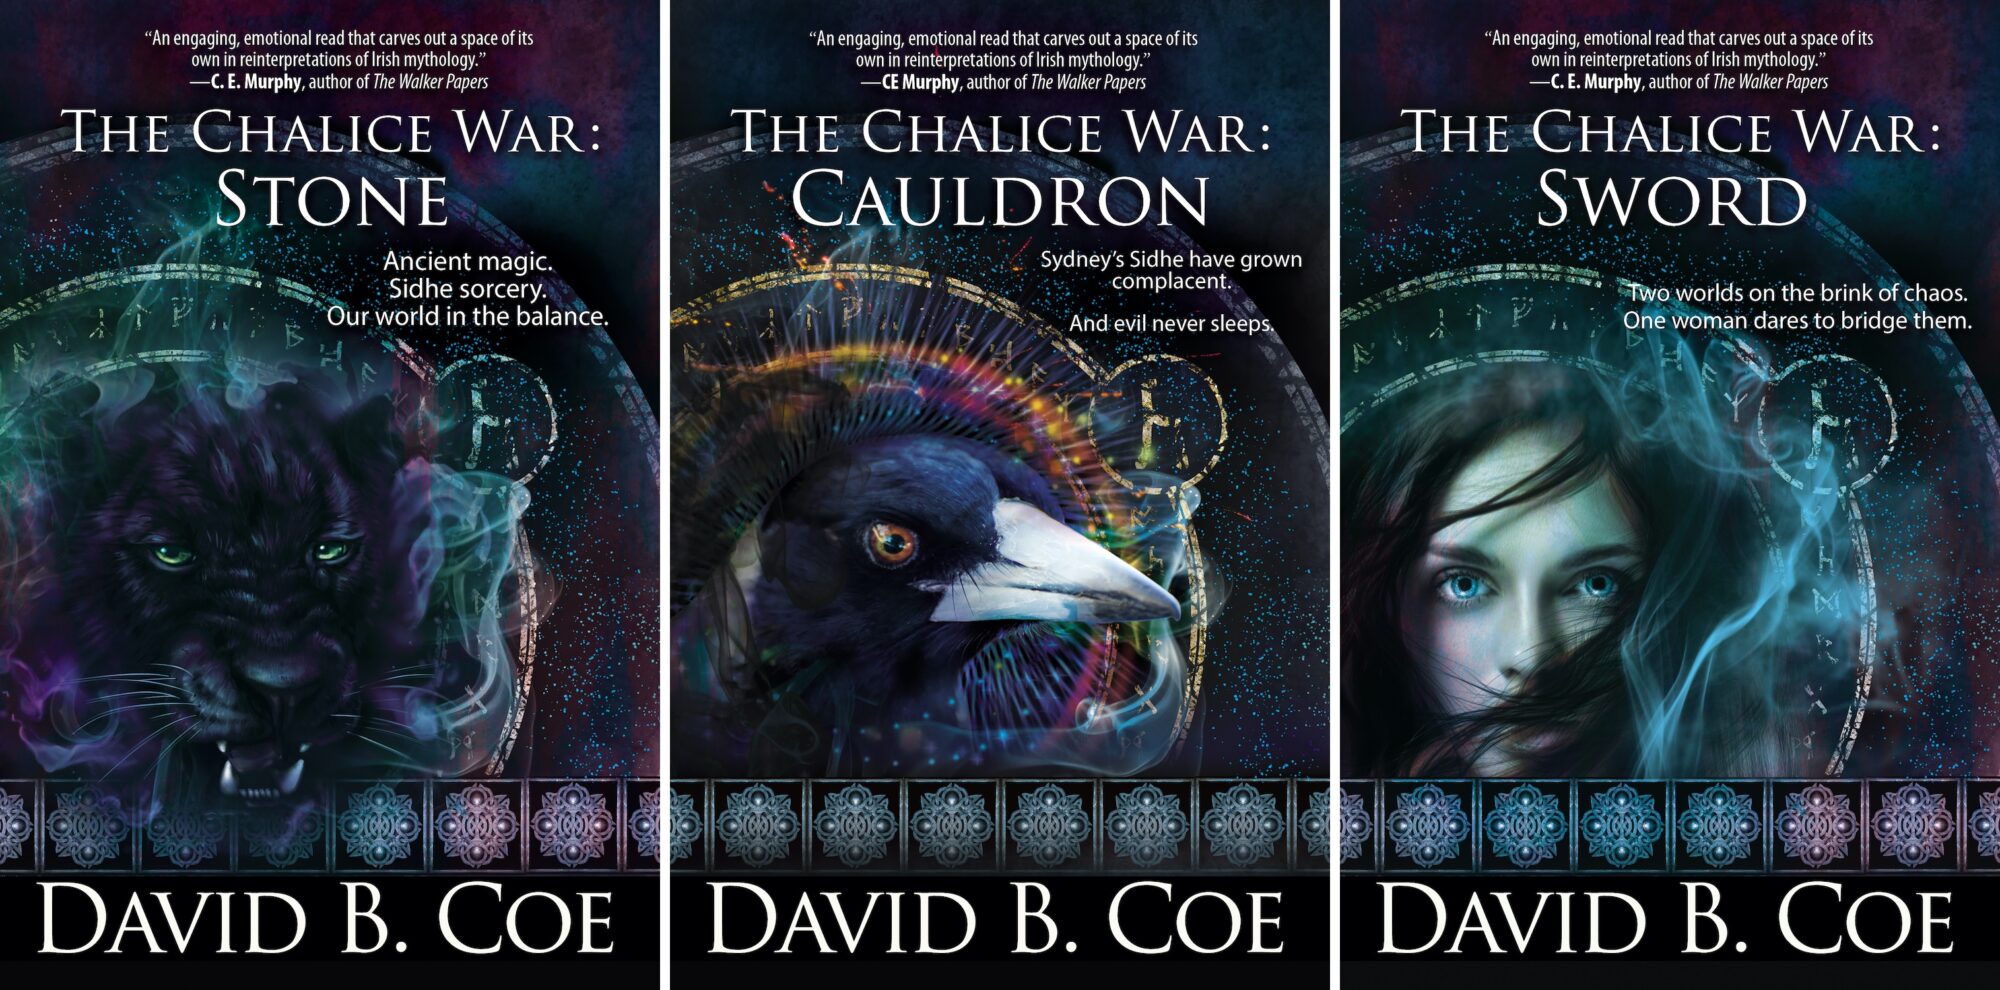 The Chalice War trilogy, by David B. Coe